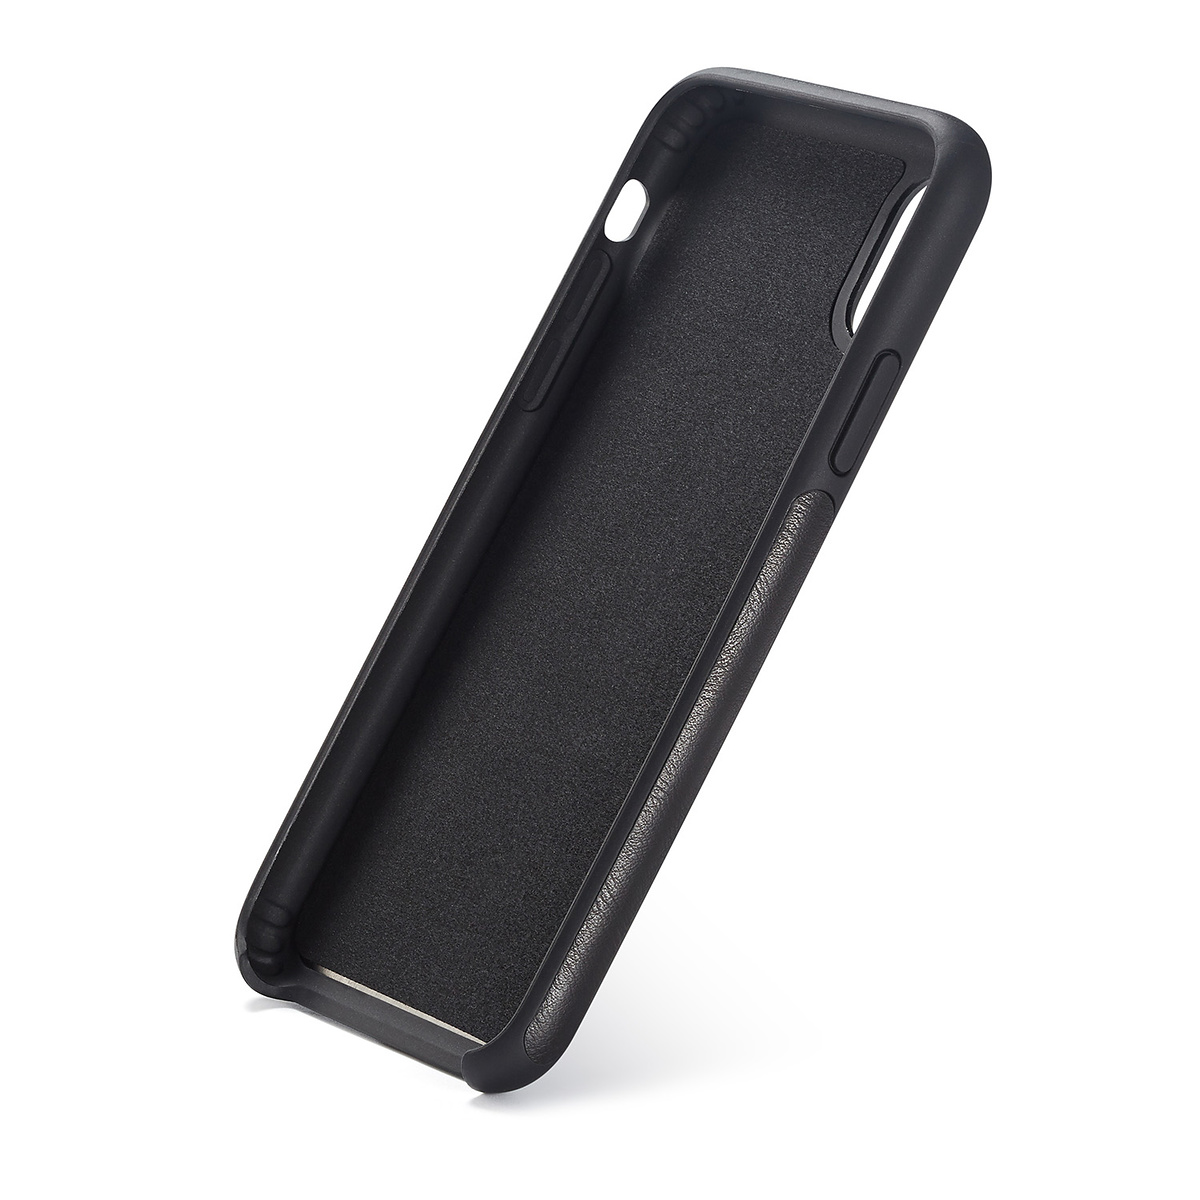 BRG Luxury plånboksfodral med ställ, iPhone X/XS, svart